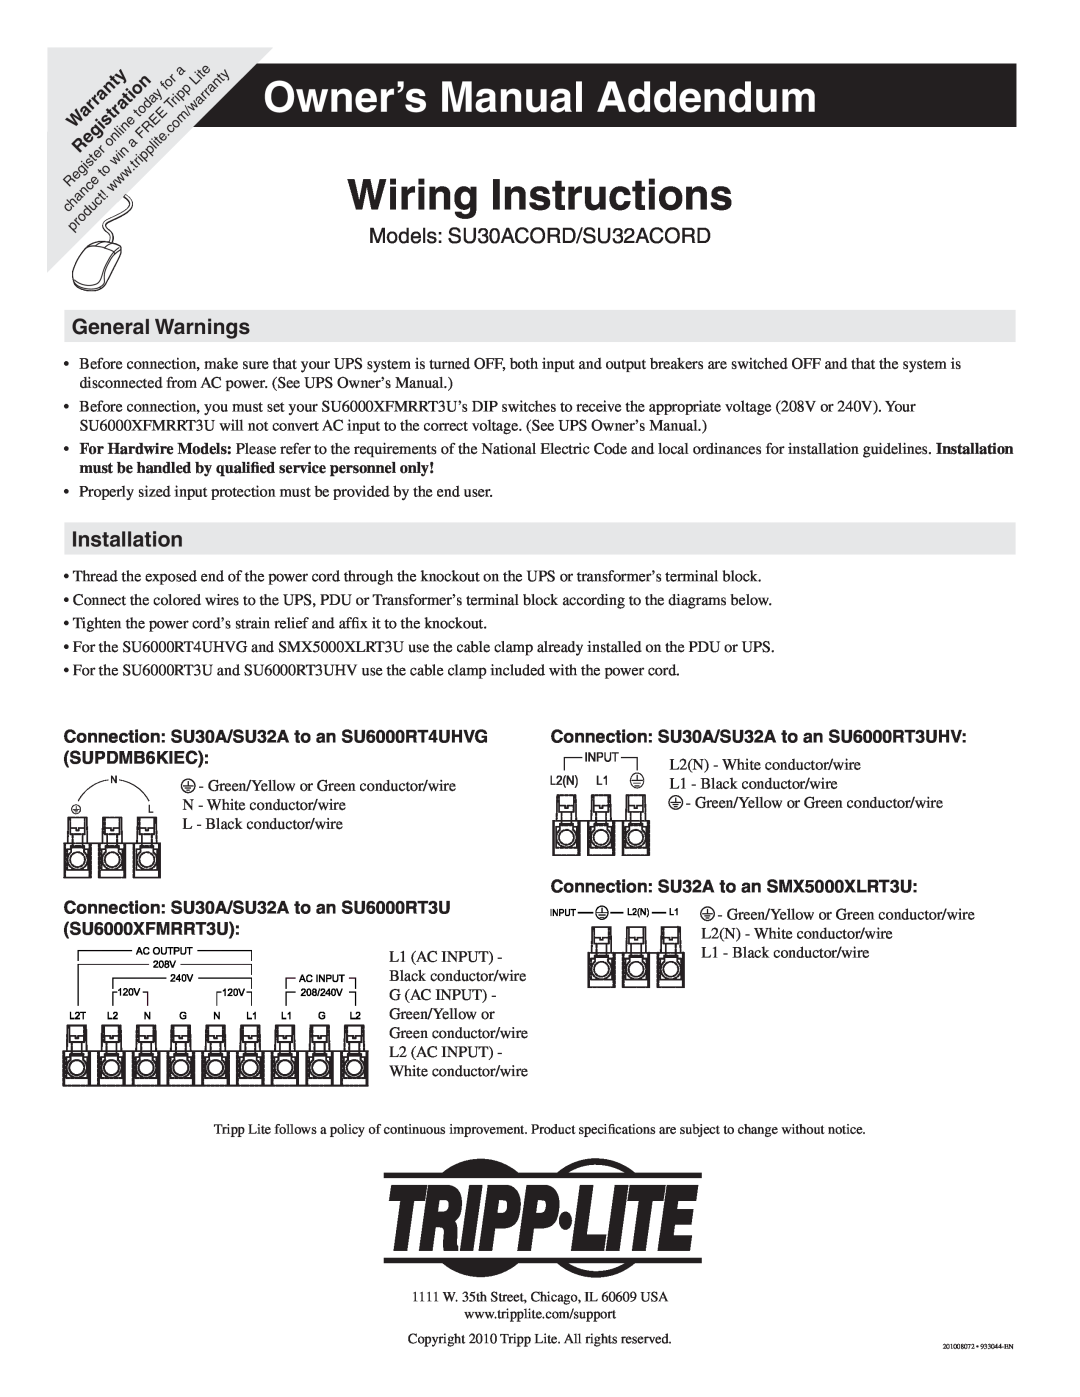 Tripp Lite owner manual Owner’s Manual Addendum, Wiring Instructions, Models SU30ACORD/SU32ACORD, General Warnings 